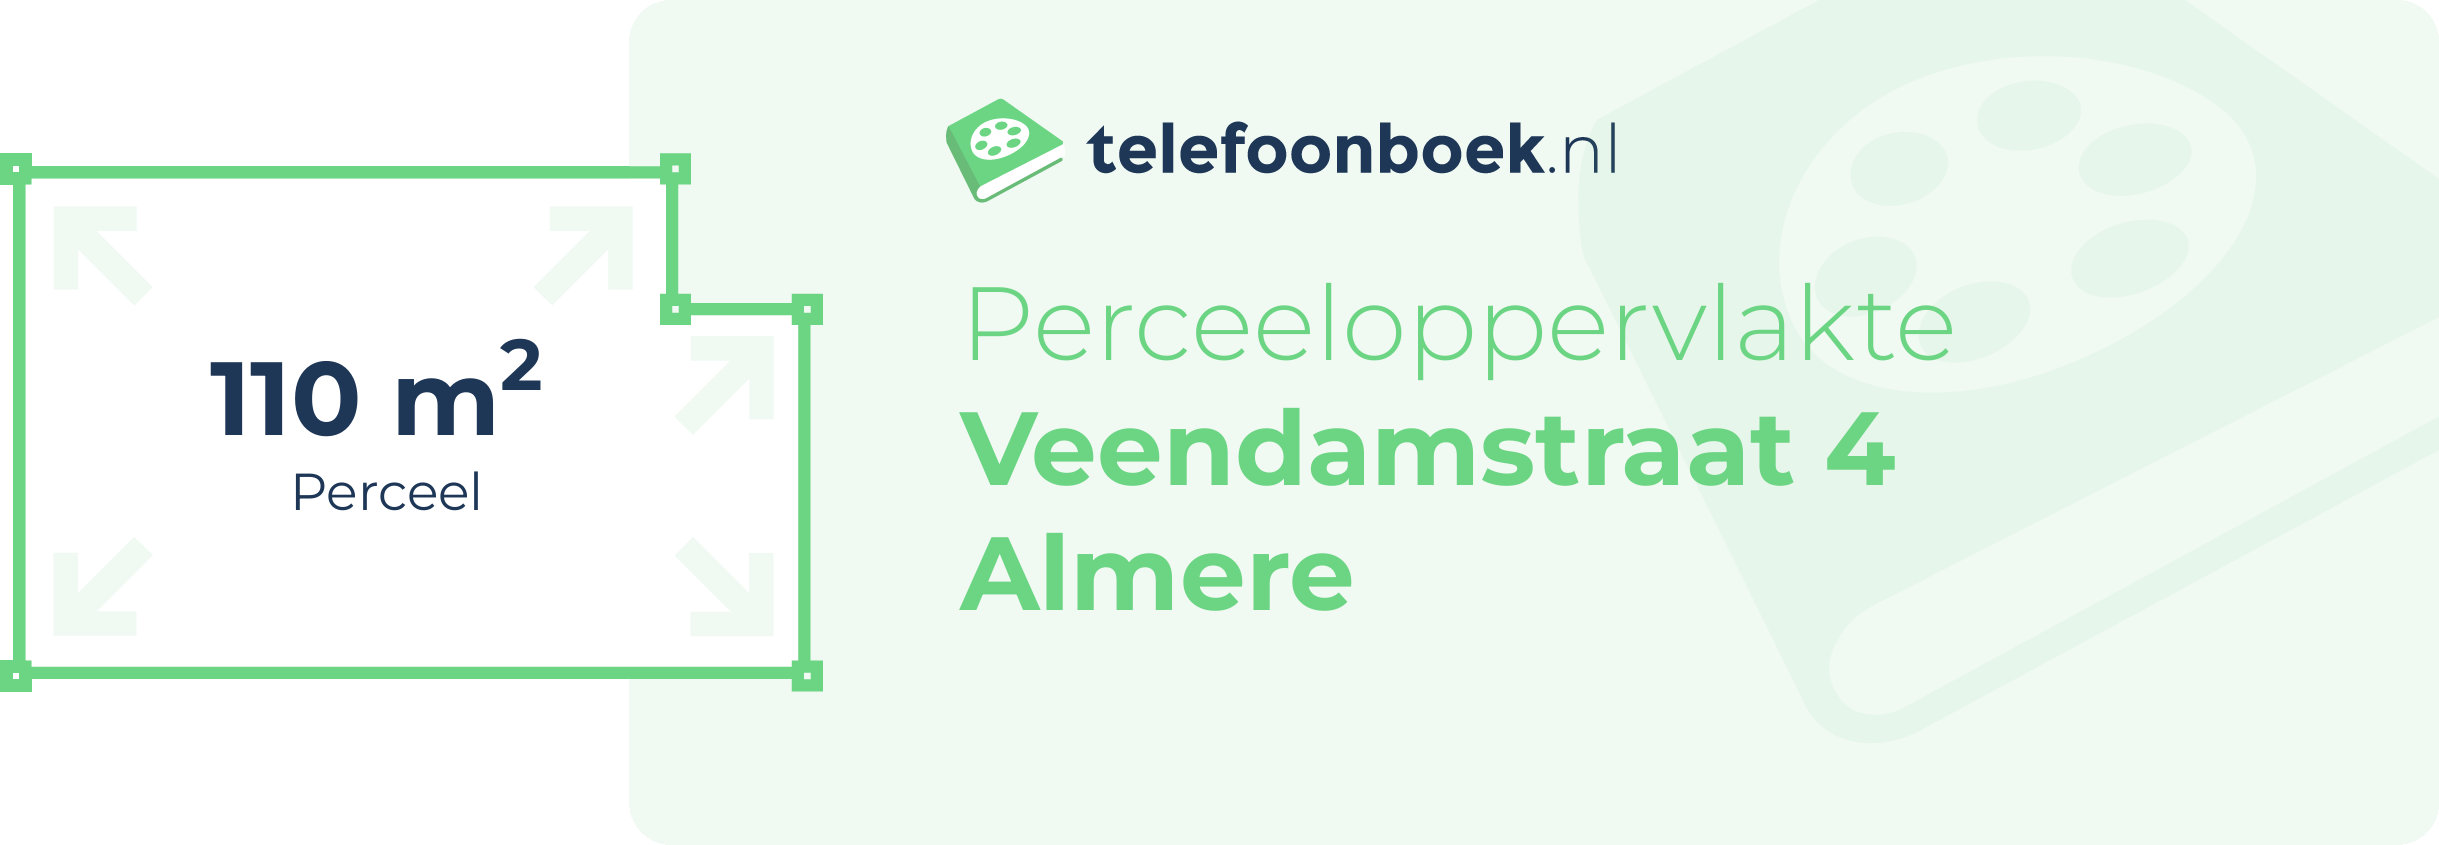 Perceeloppervlakte Veendamstraat 4 Almere